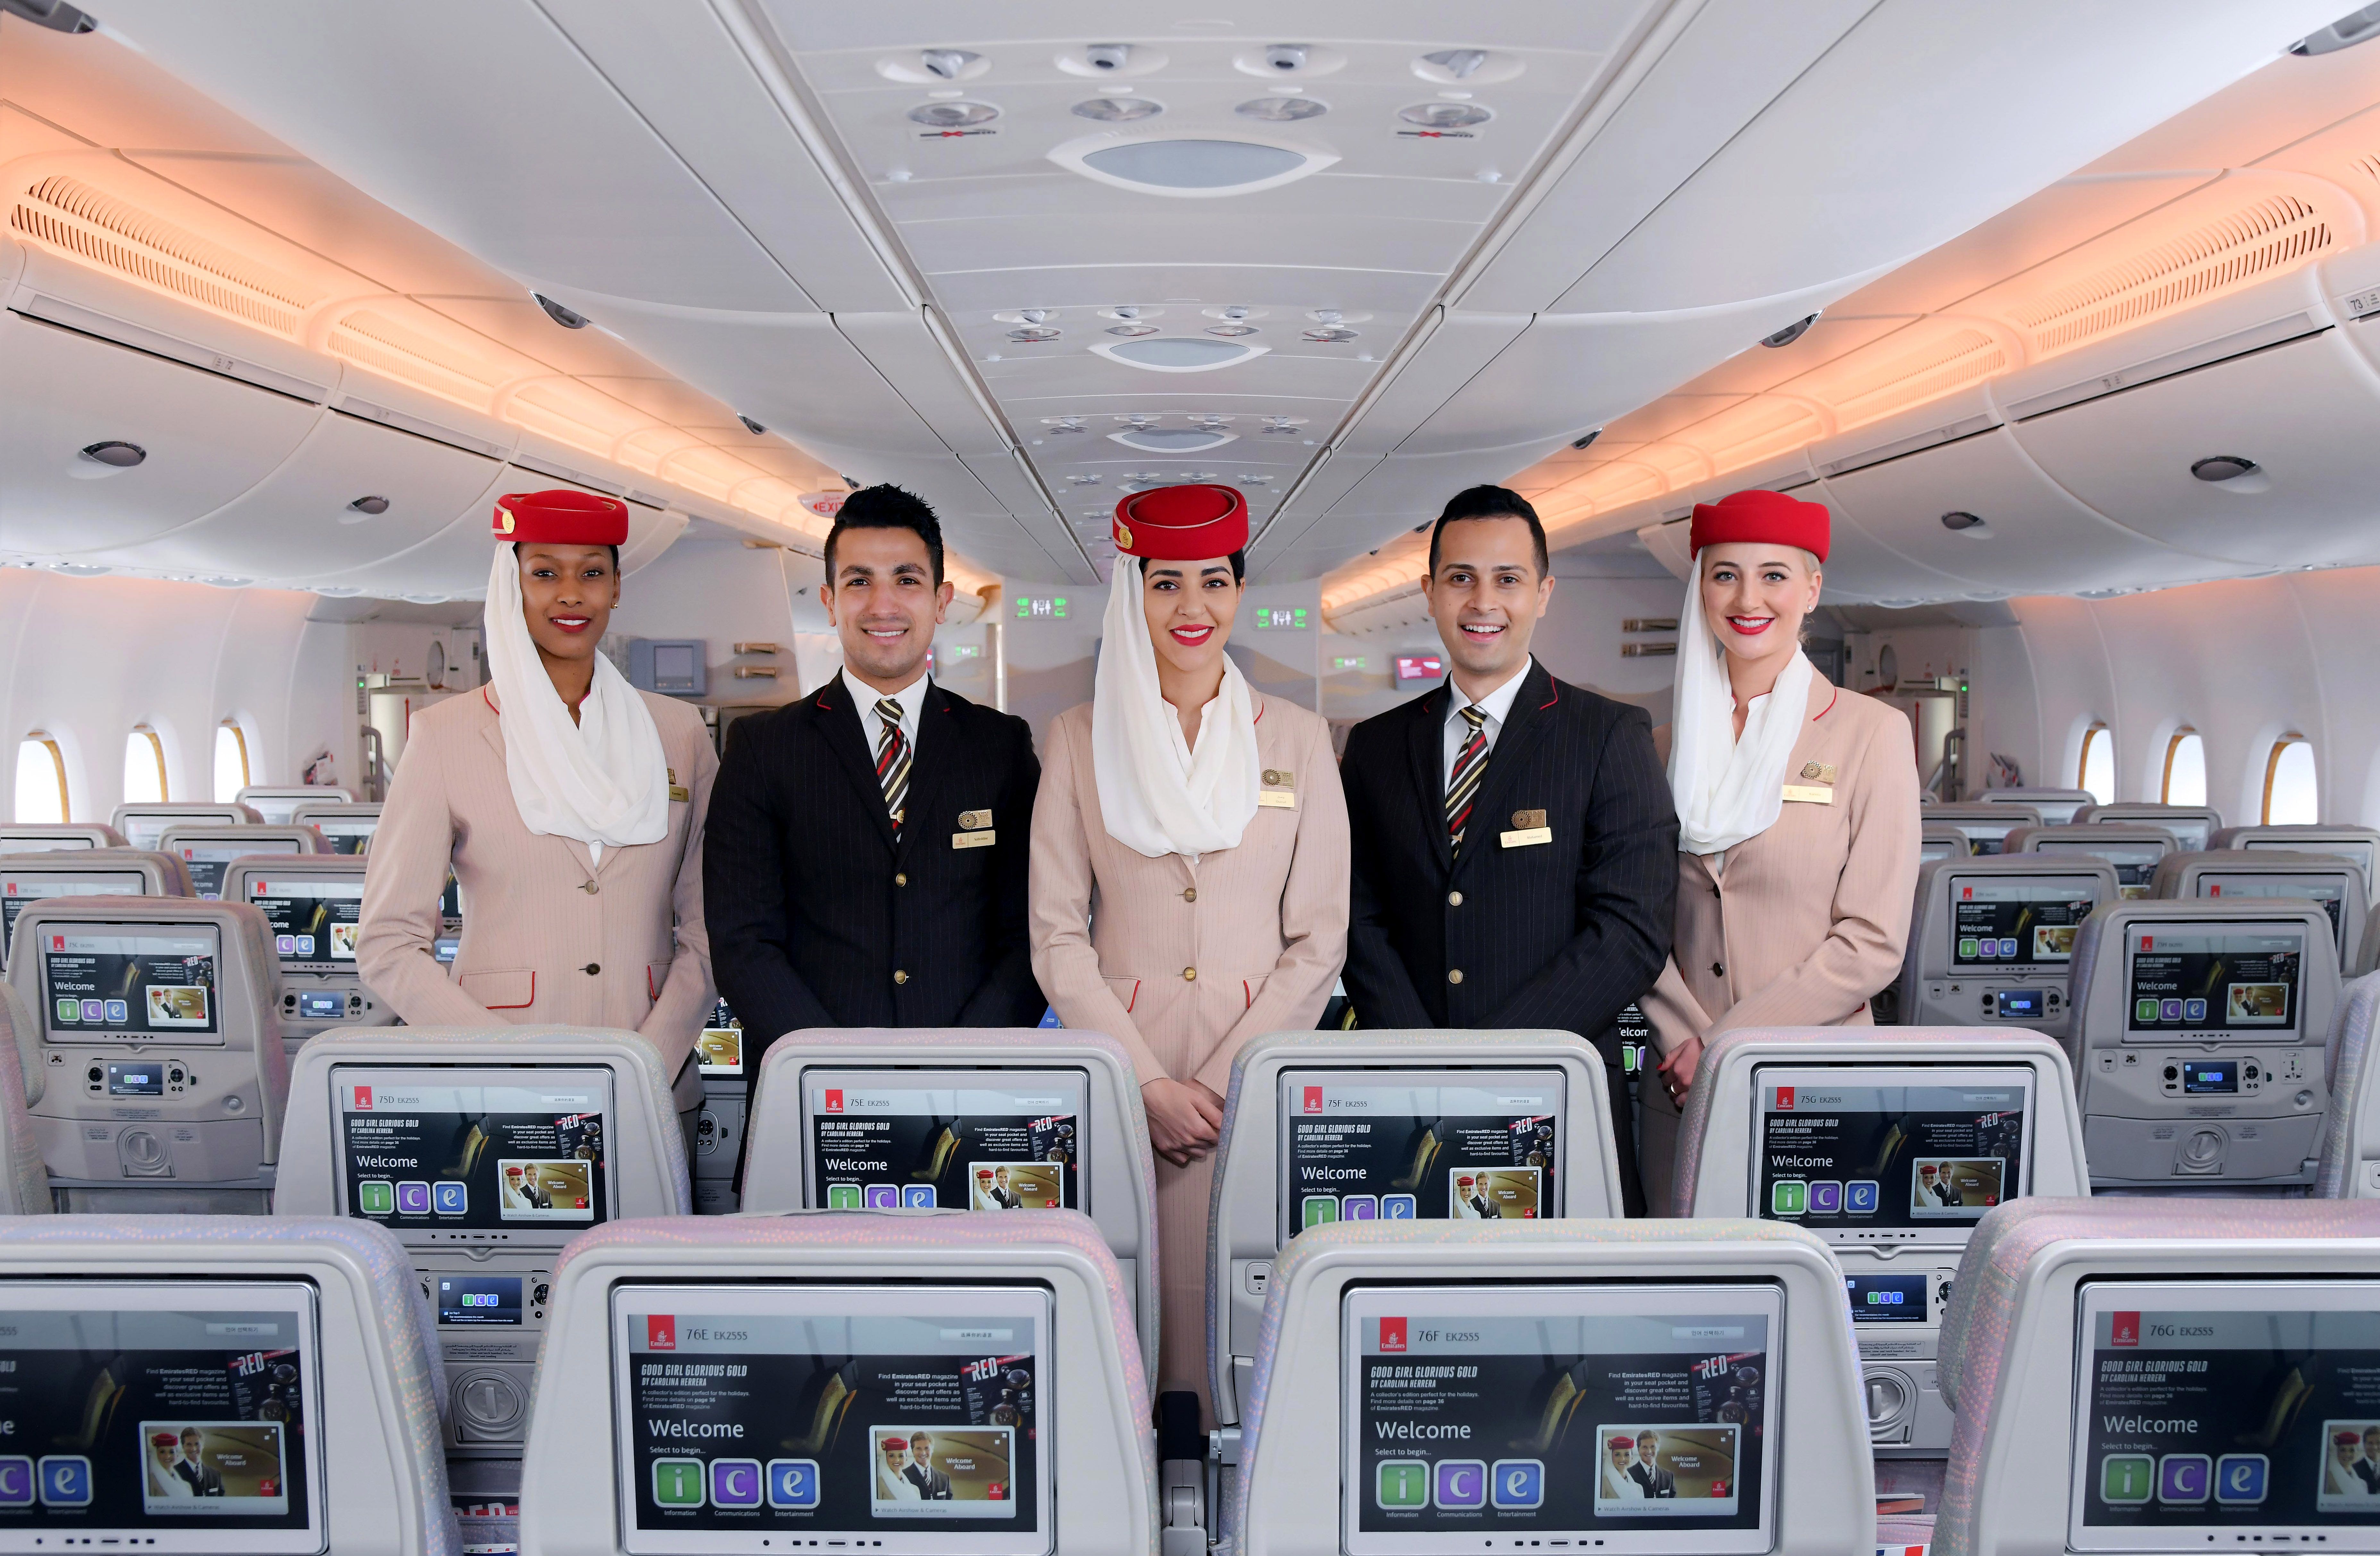 Emirates Cabin Crew in the economy class cabin.